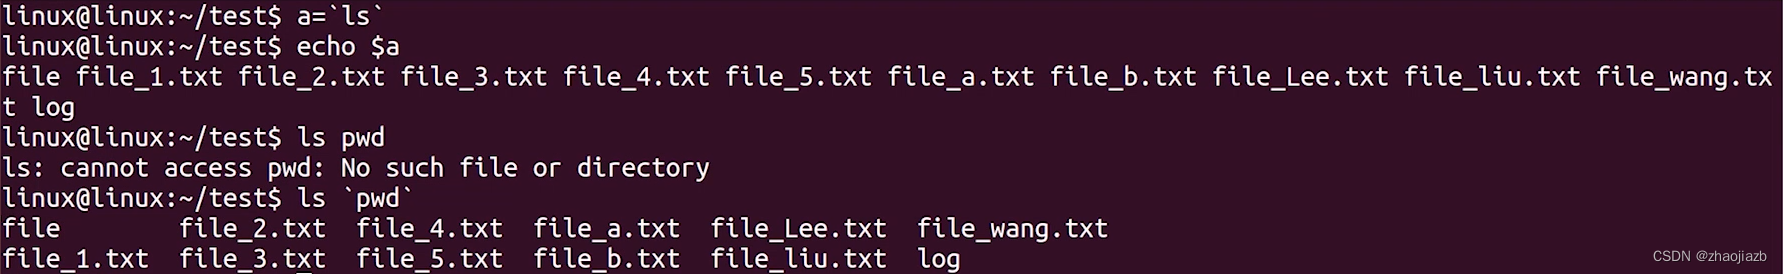 Linux操作系统使用及C高级编程-D3Linux shell命令(权限、输入输出)